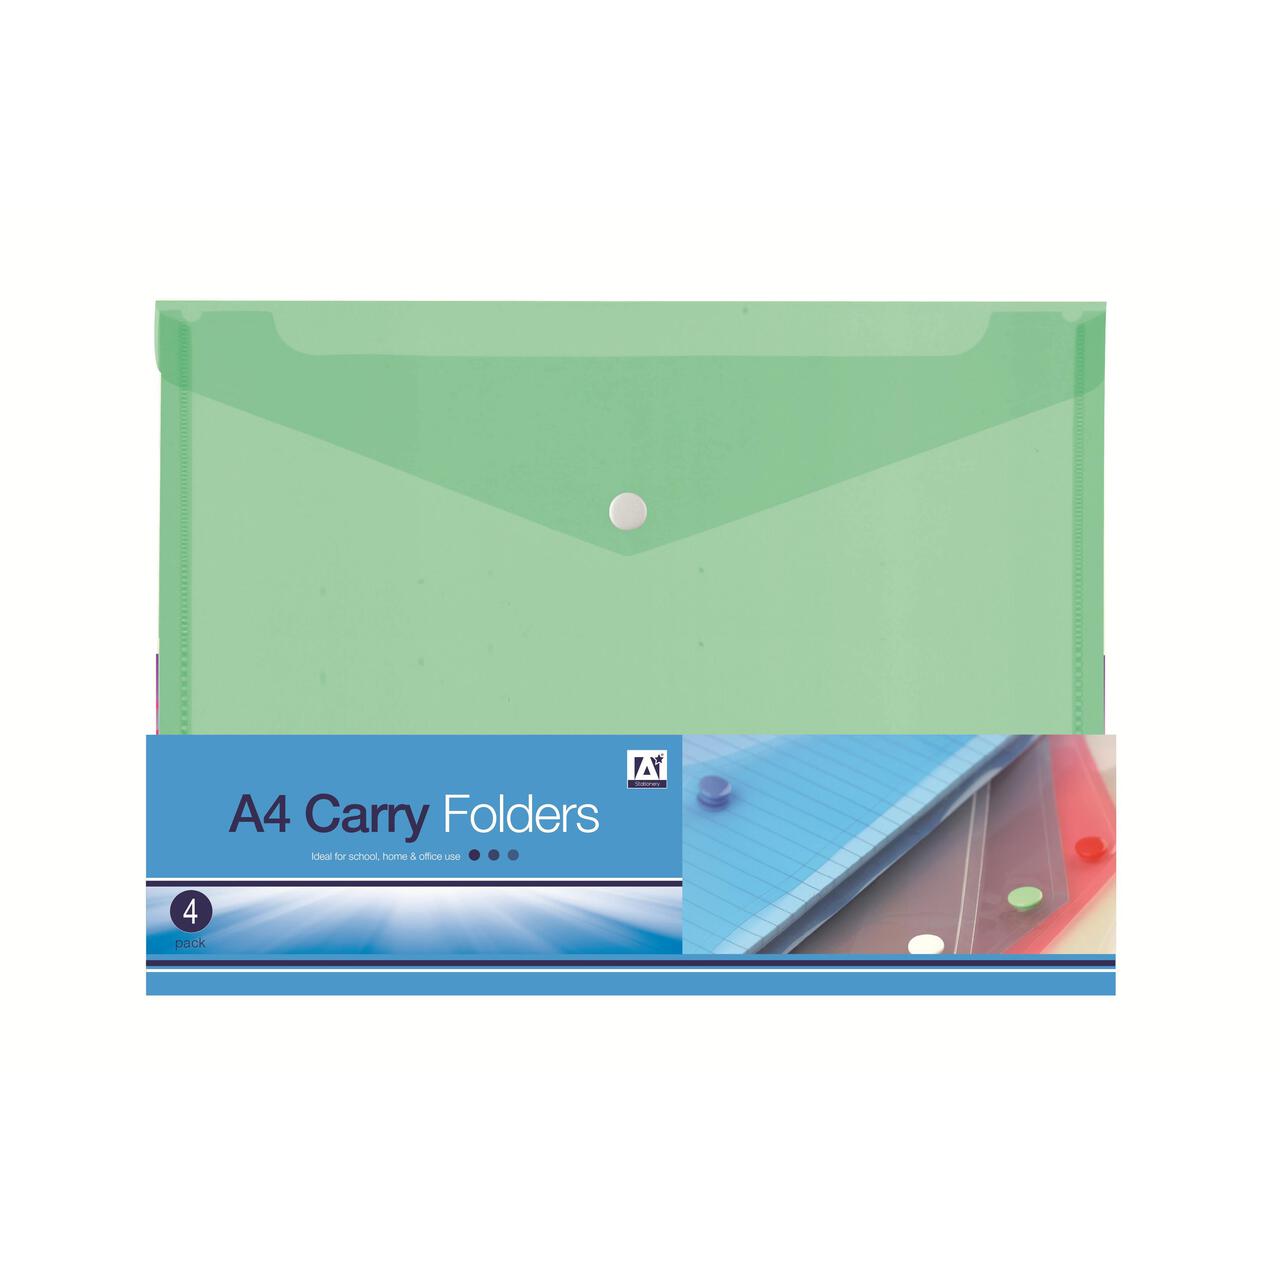 A4 Carry Folders 3 per pack